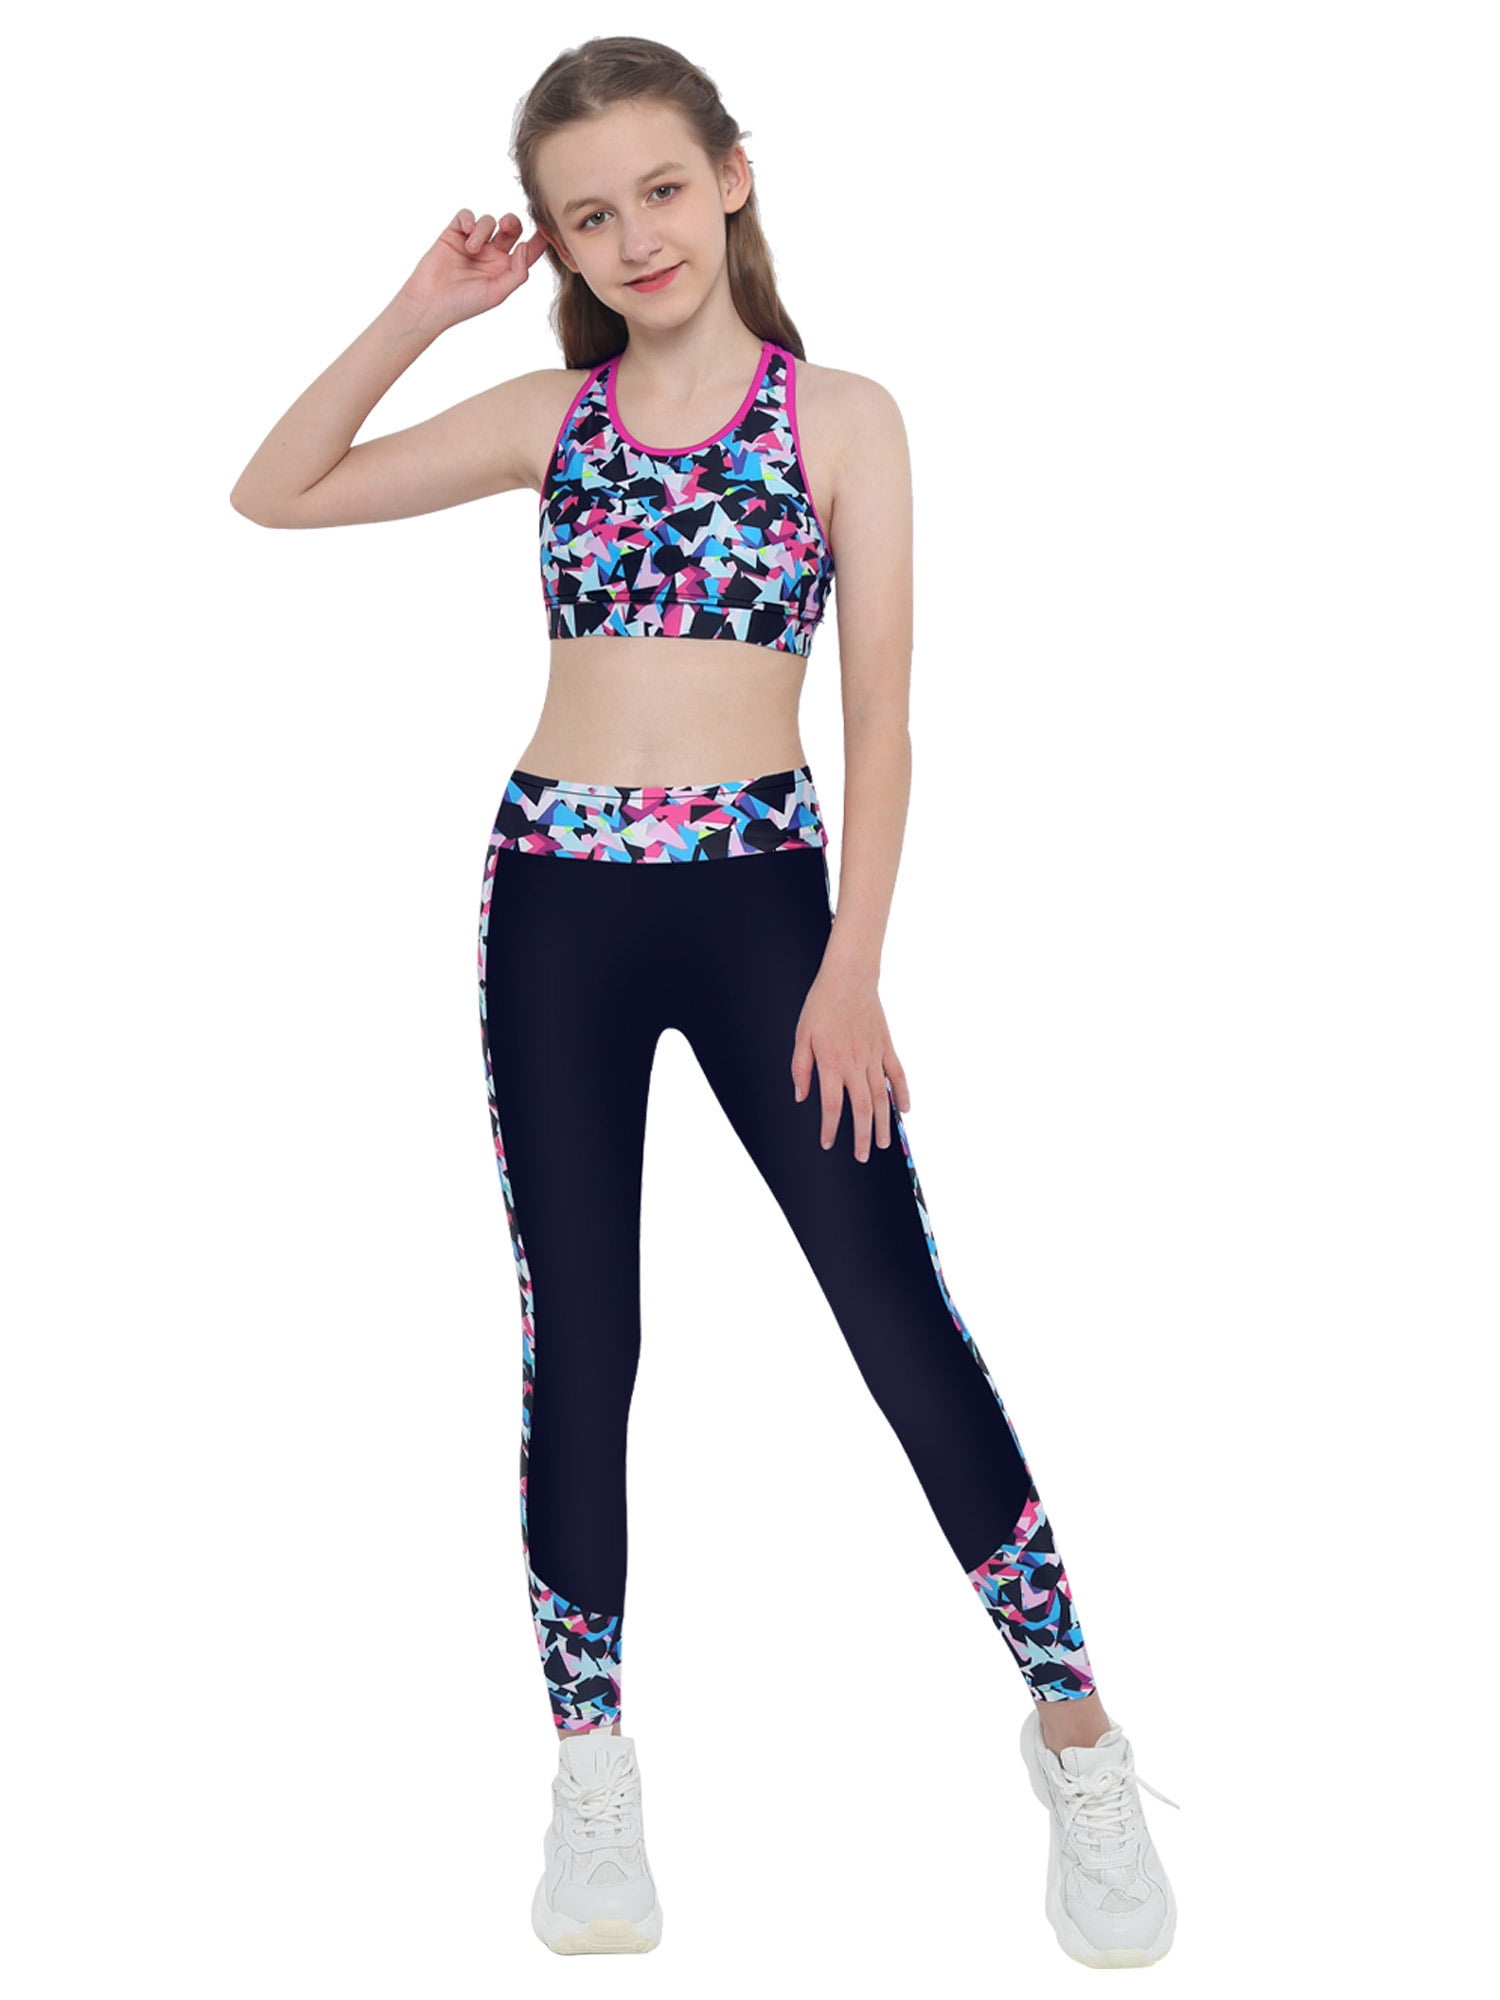 iiniim Kids Girls 3Piece Yoga Dance Gymnastics Tracksuit Long Sleeve Crop  Top Sports Bra and Leggings Sportwear Set 